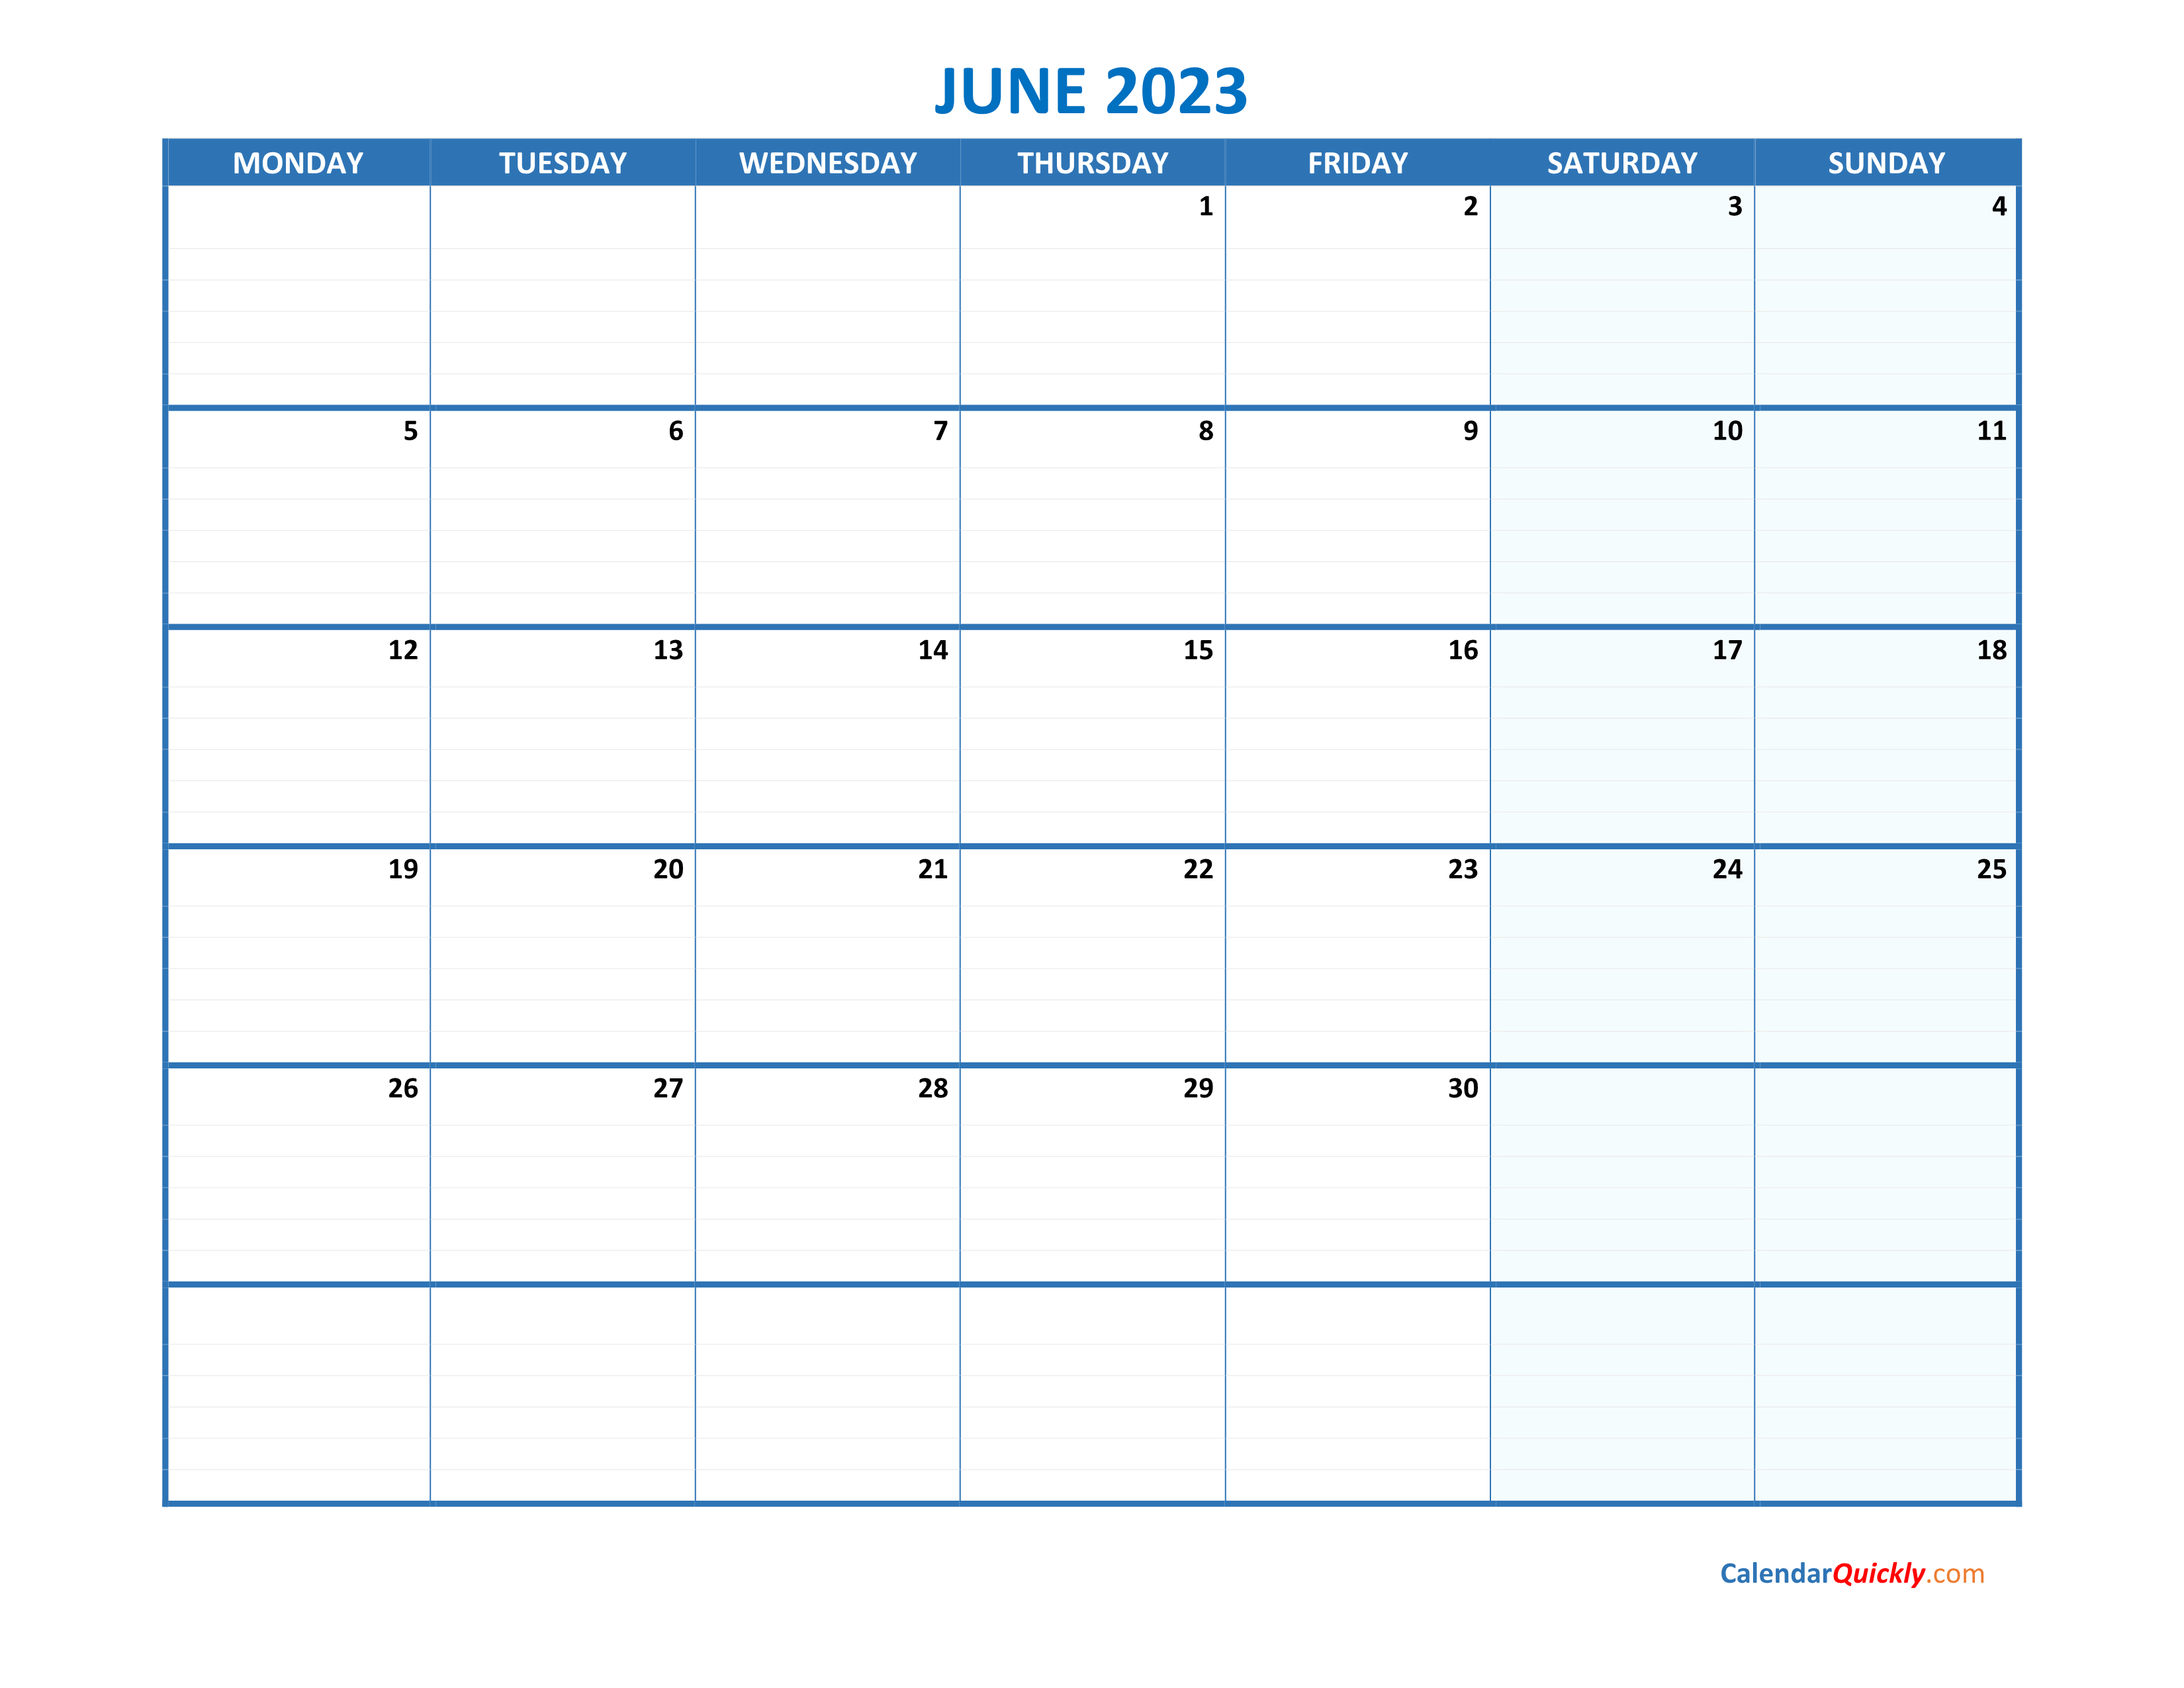 June Monday 2023 Blank Calendar Calendar Quickly